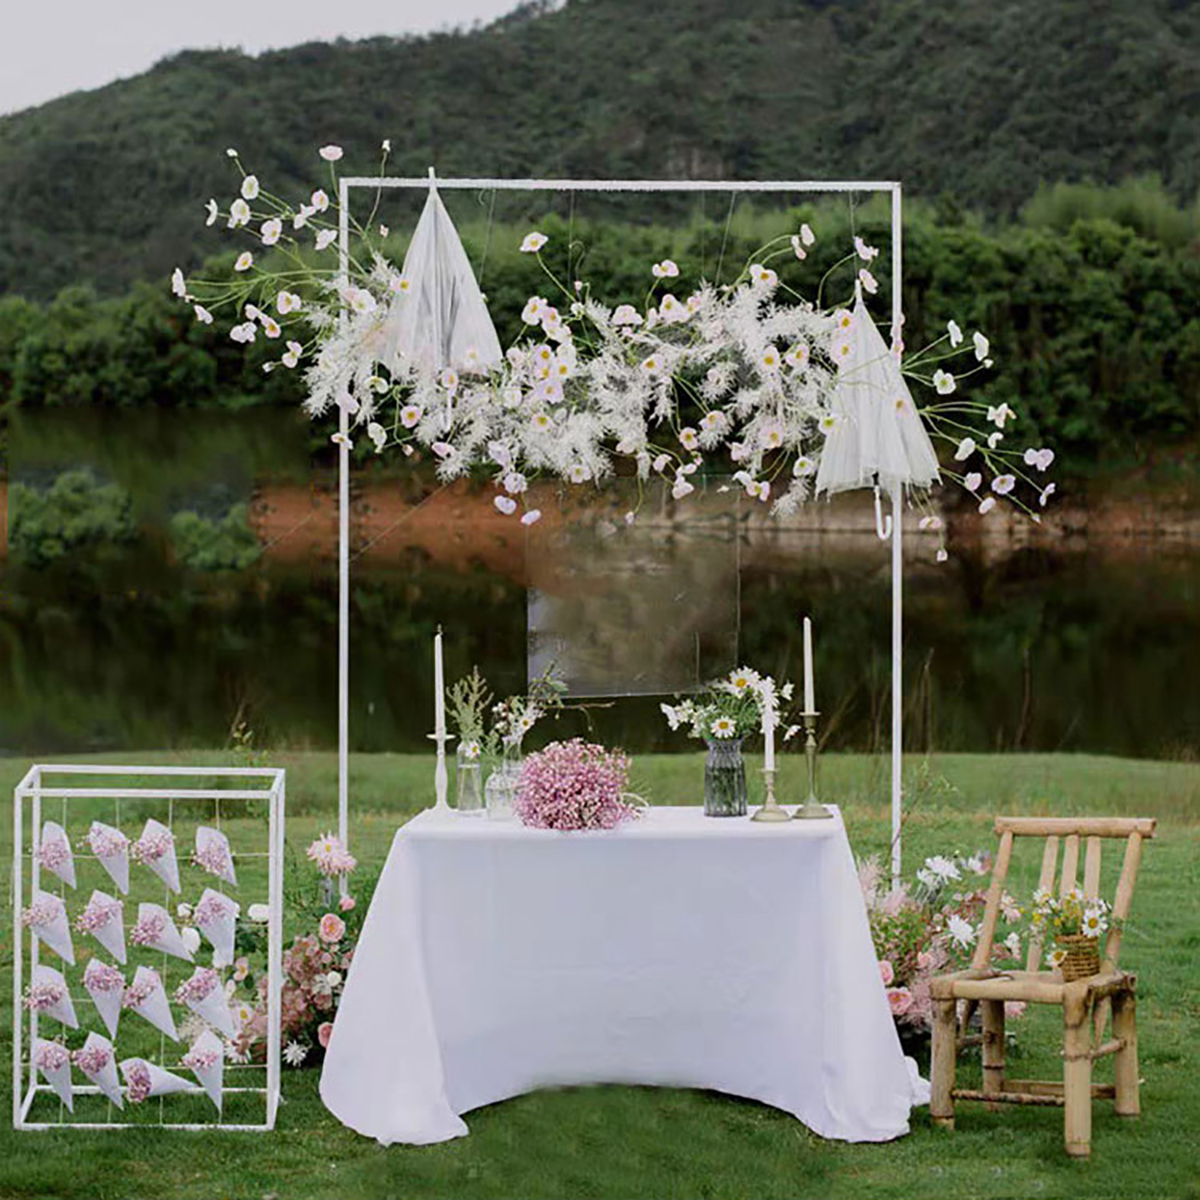 Garfans-Square-Metal-Arch-Wedding-Party-Bridal-Prom-Garden-Floral-Decoration-Party-Supplies-Decorati-1635386-4